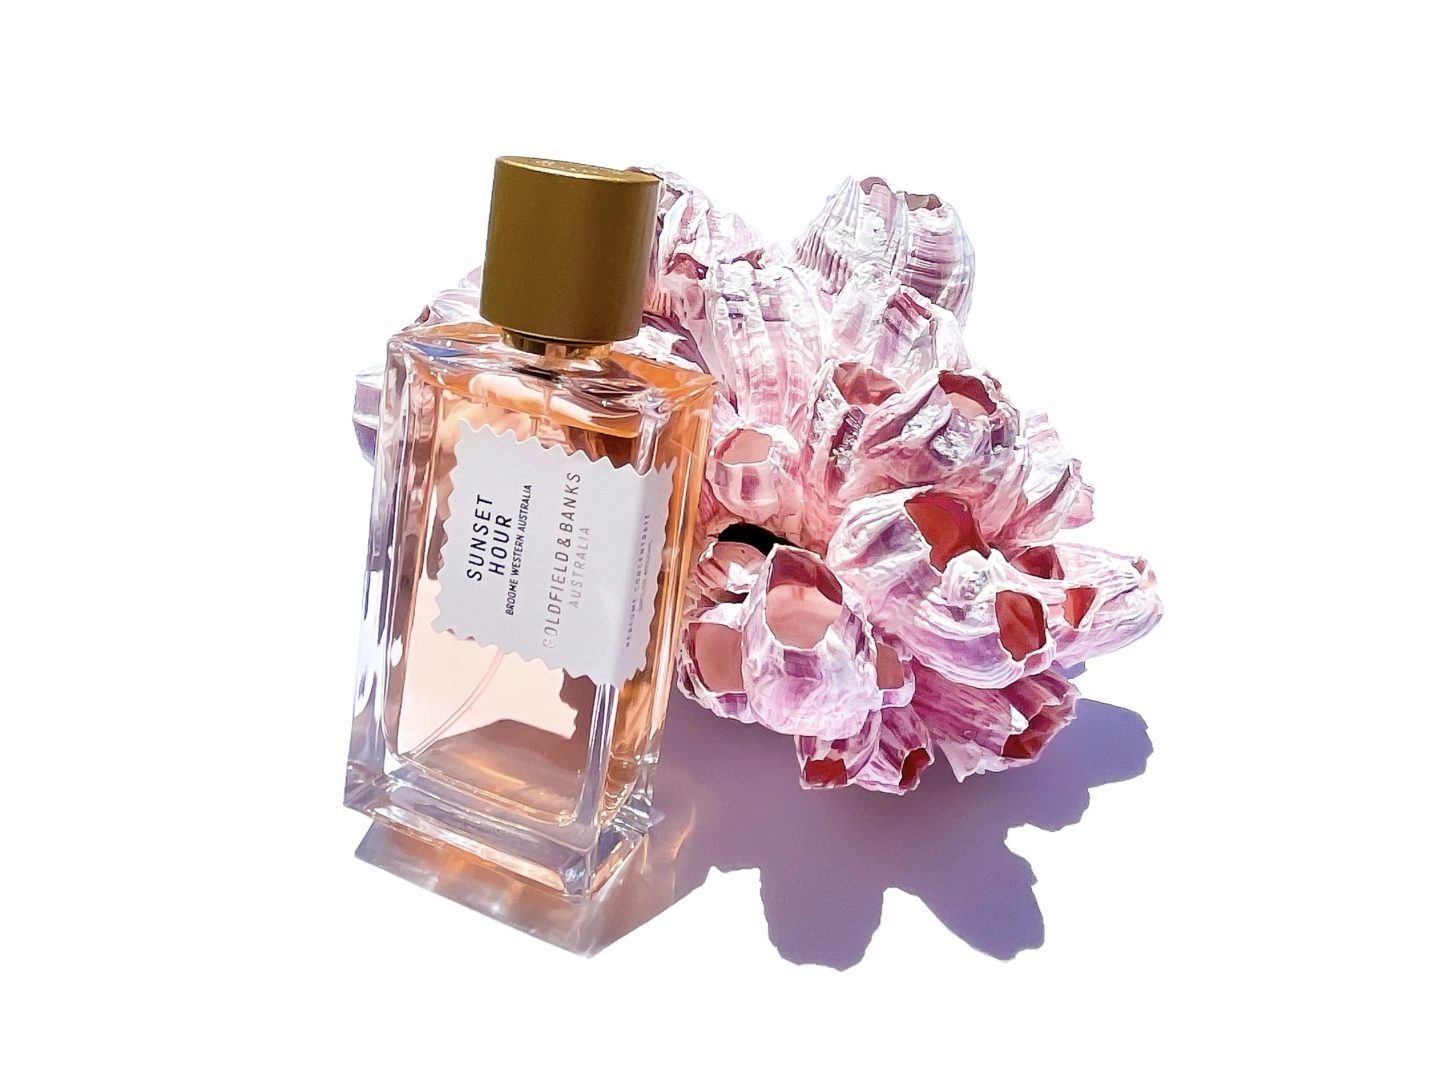 eauxSILLAGE Goldfield & Banks Sunset Hour perfume